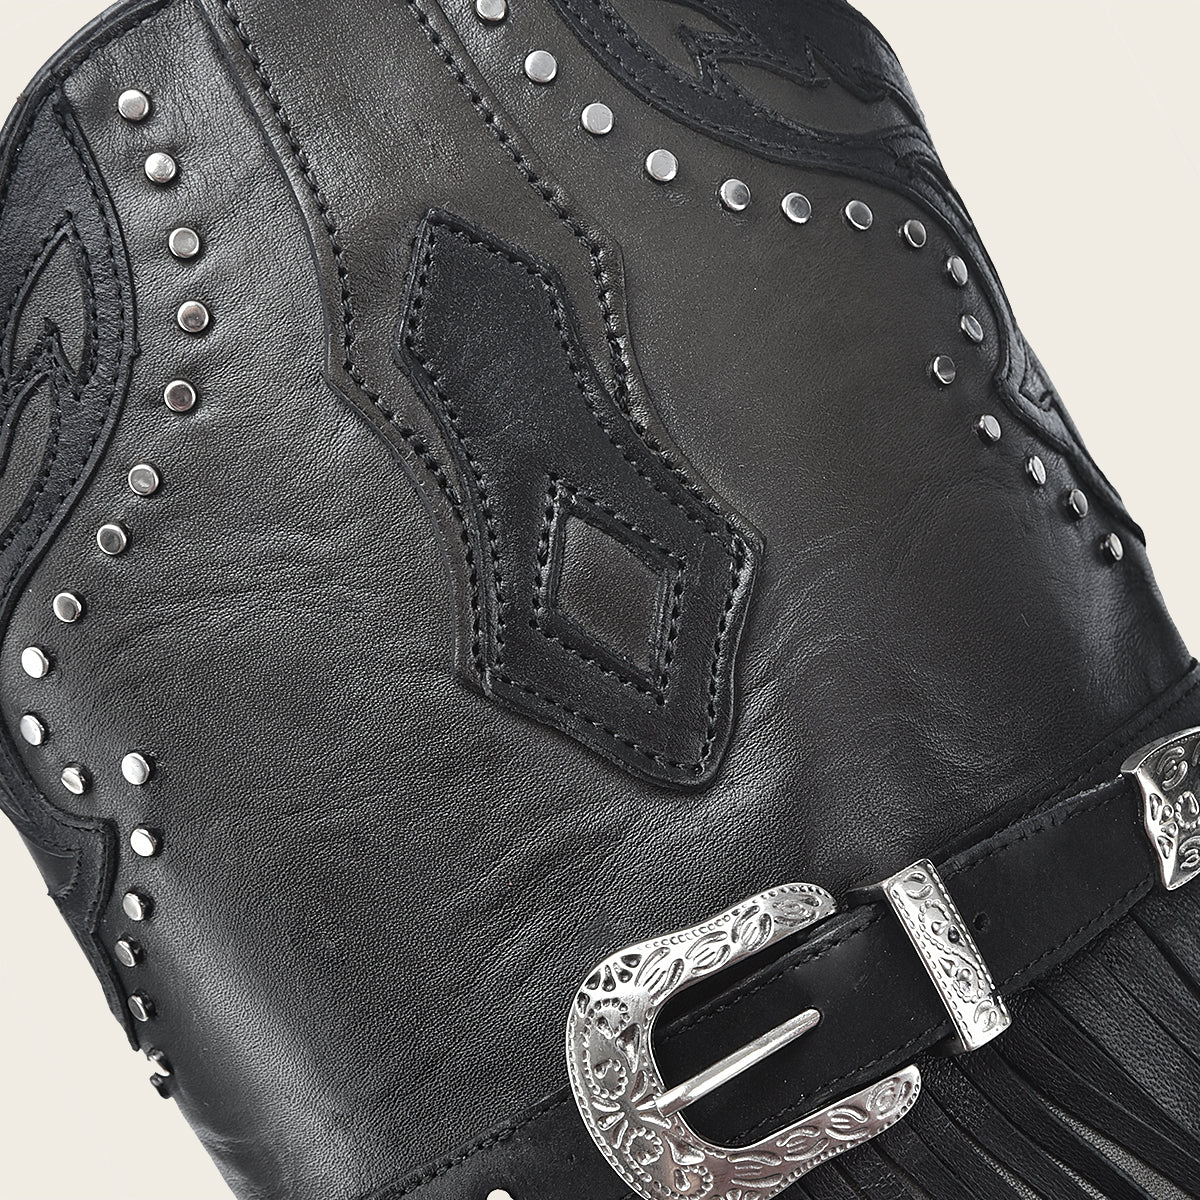 Black exotic leather fringed cowboy boot